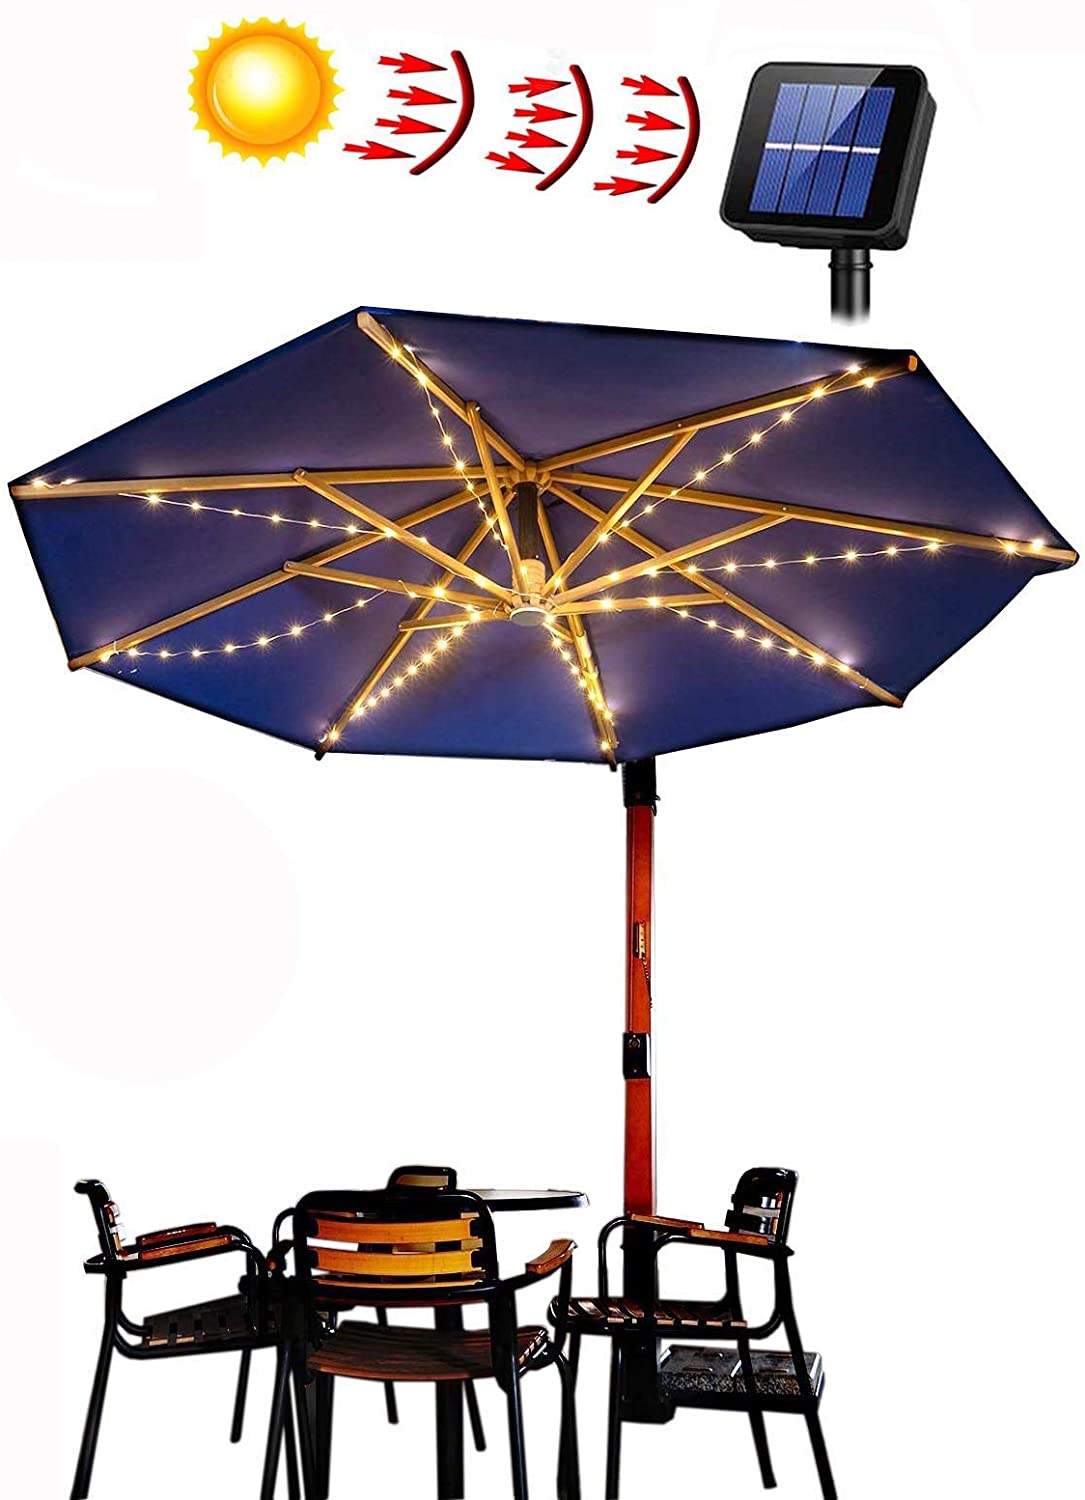 Etercycle Outdoor Solar Patio Umbrella String Light